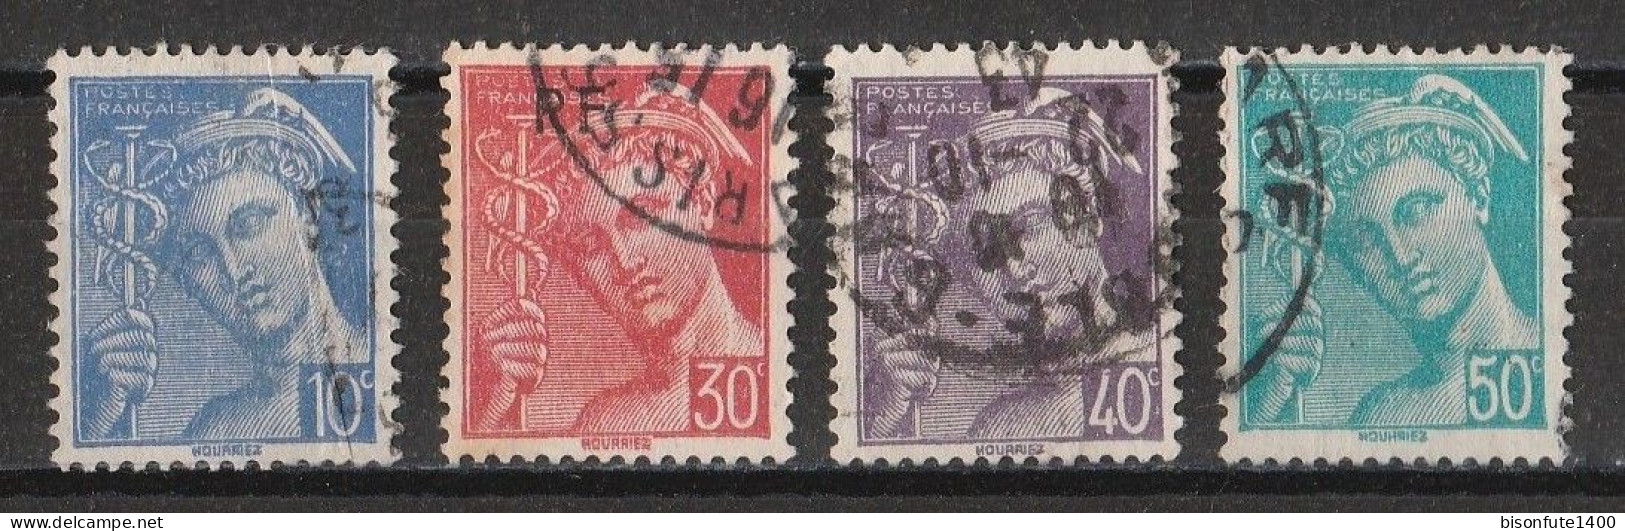 France 1942 : Timbres Yvert & Tellier N° 546 - 547 - 548 - 549 Et 552 Avec Oblitérations Rondes. - Usati